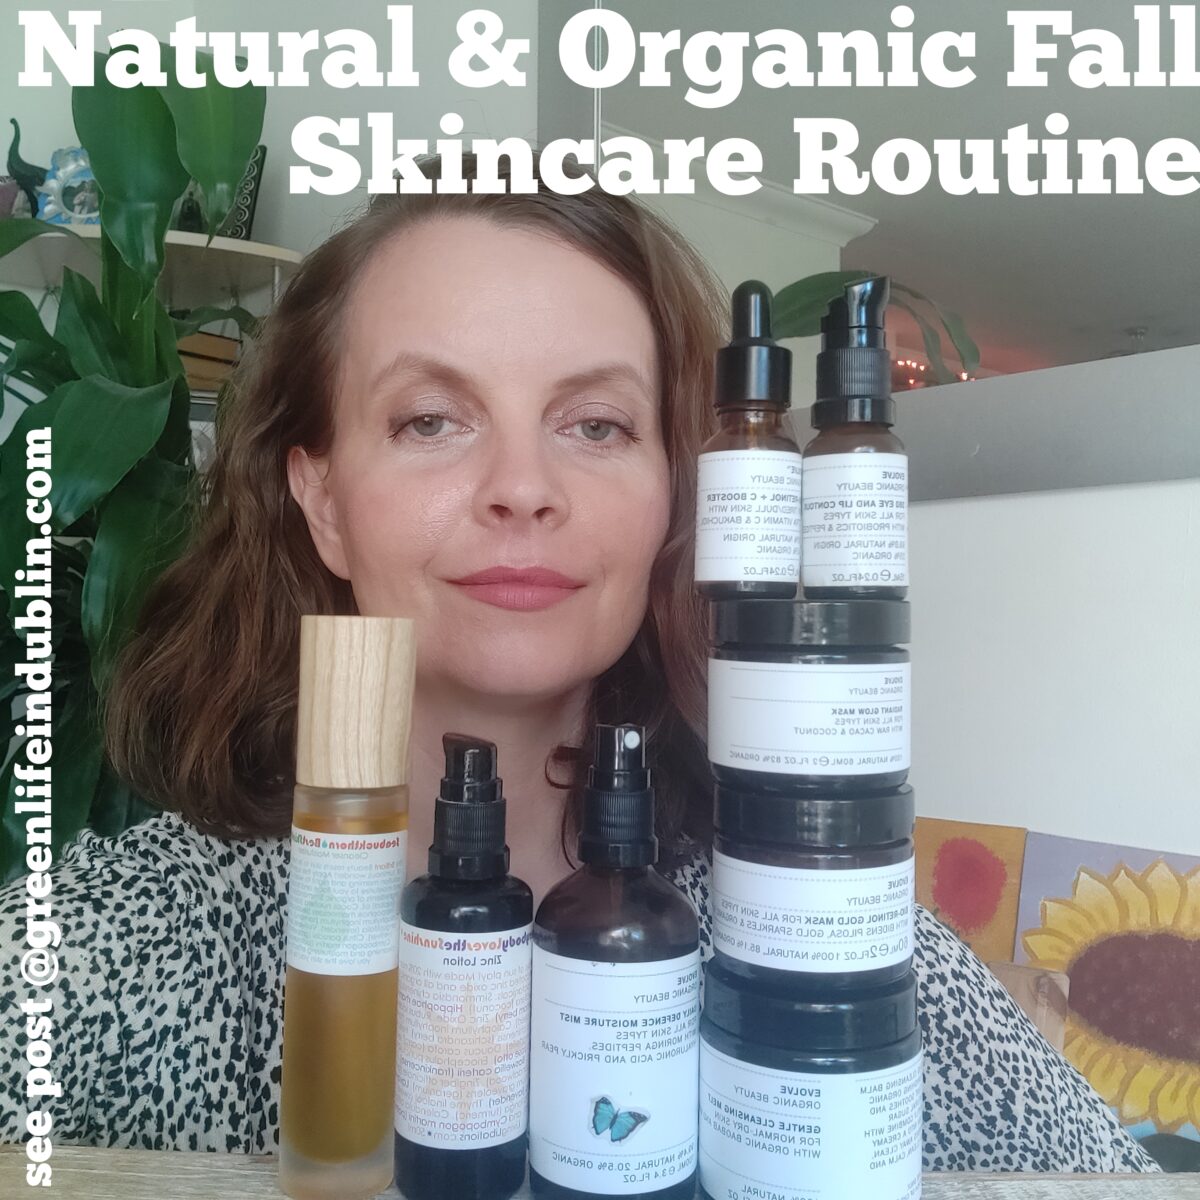 My Natural & Organic Fall Skincare Routine - Evolve Organic Beauty, Living Libations, Alteya Organics, Khadi & More